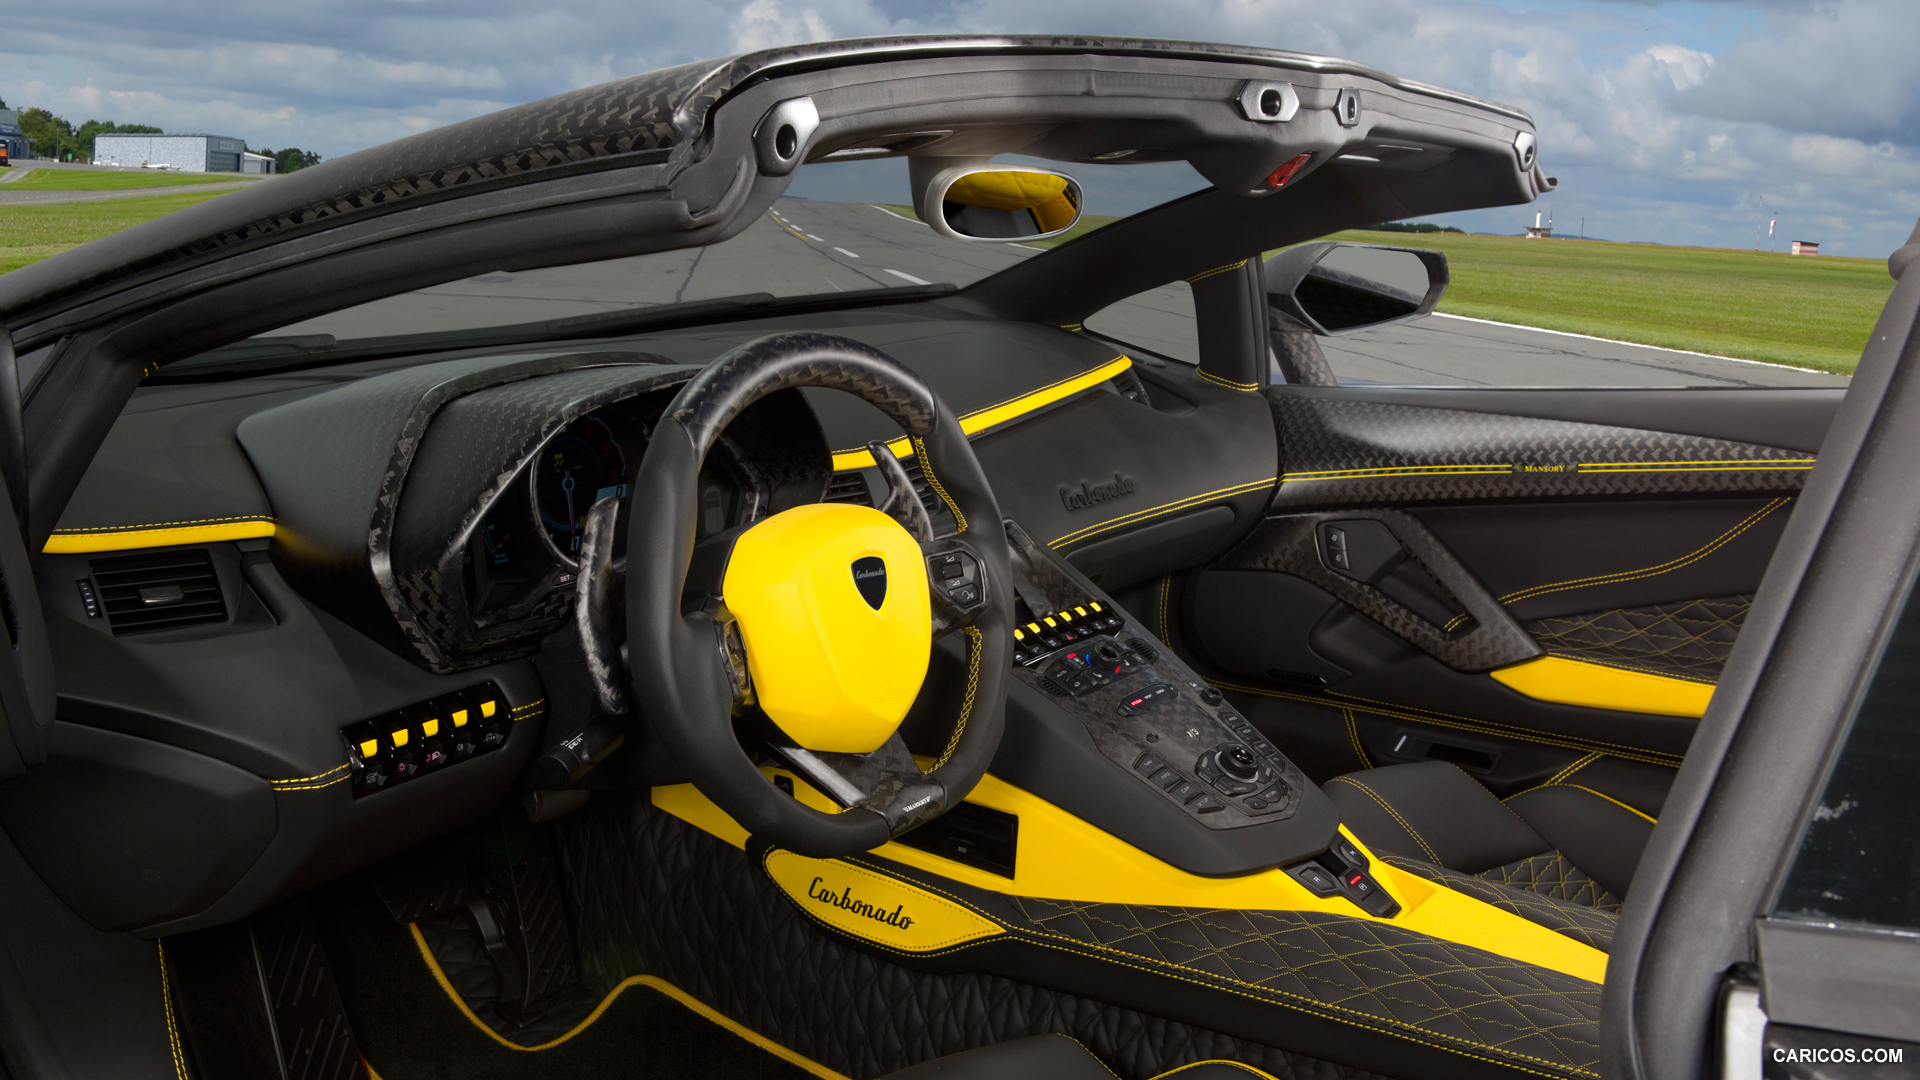 2014 Mansory Carbonado Apertos based on Lamborghini Aventador Roadster  - Interior, #4 of 8